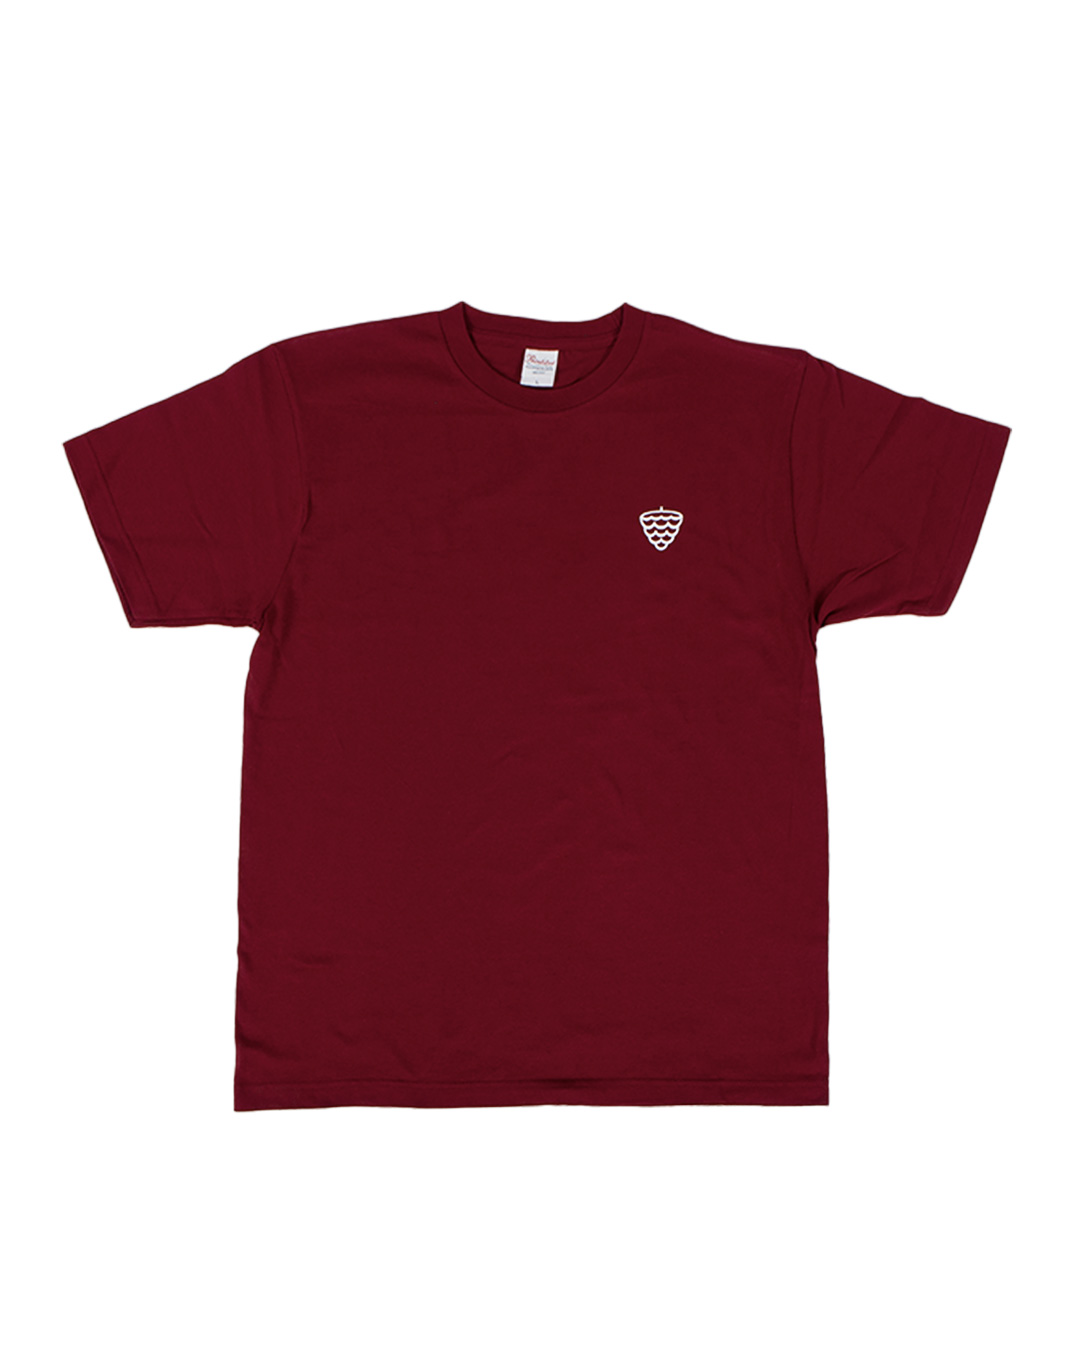 Pineconelab T-Shirts Burgundy